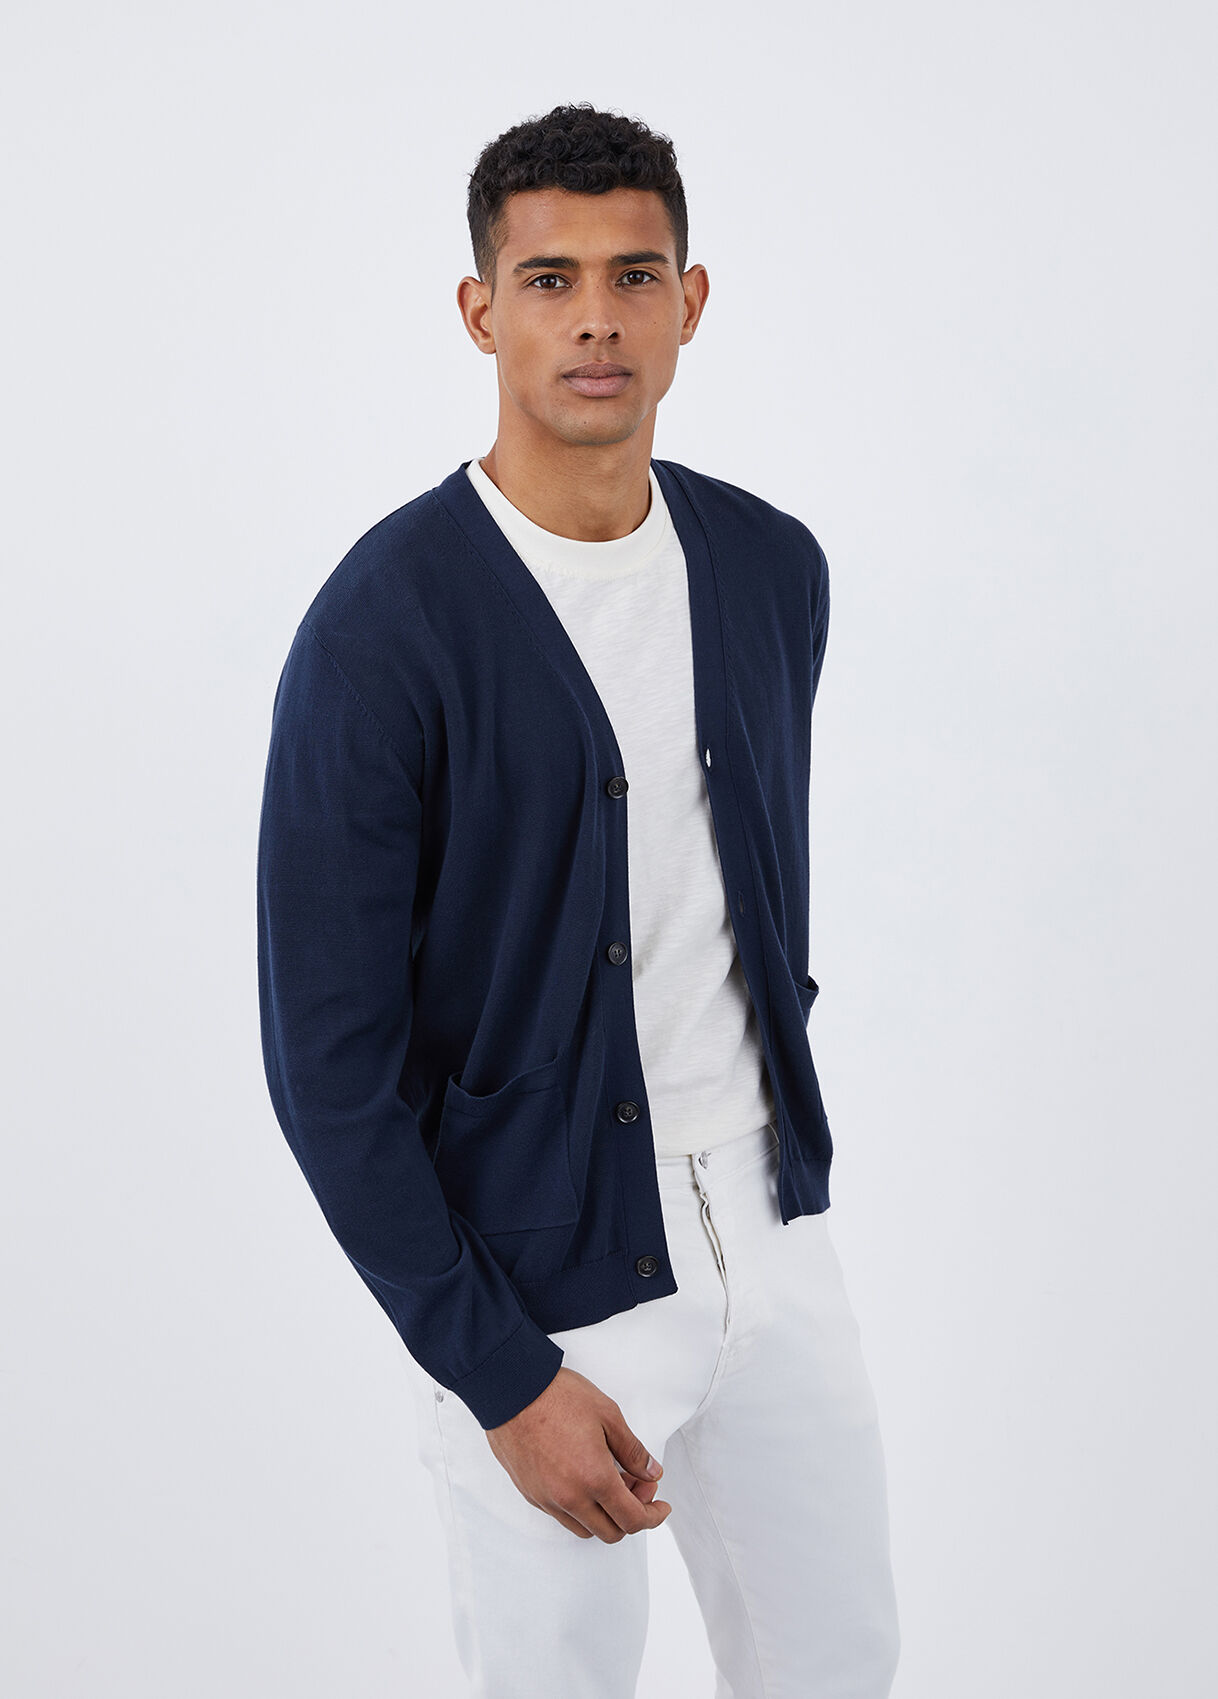 Men's sweatshirts and designer hoodies | shop online at LIU JO